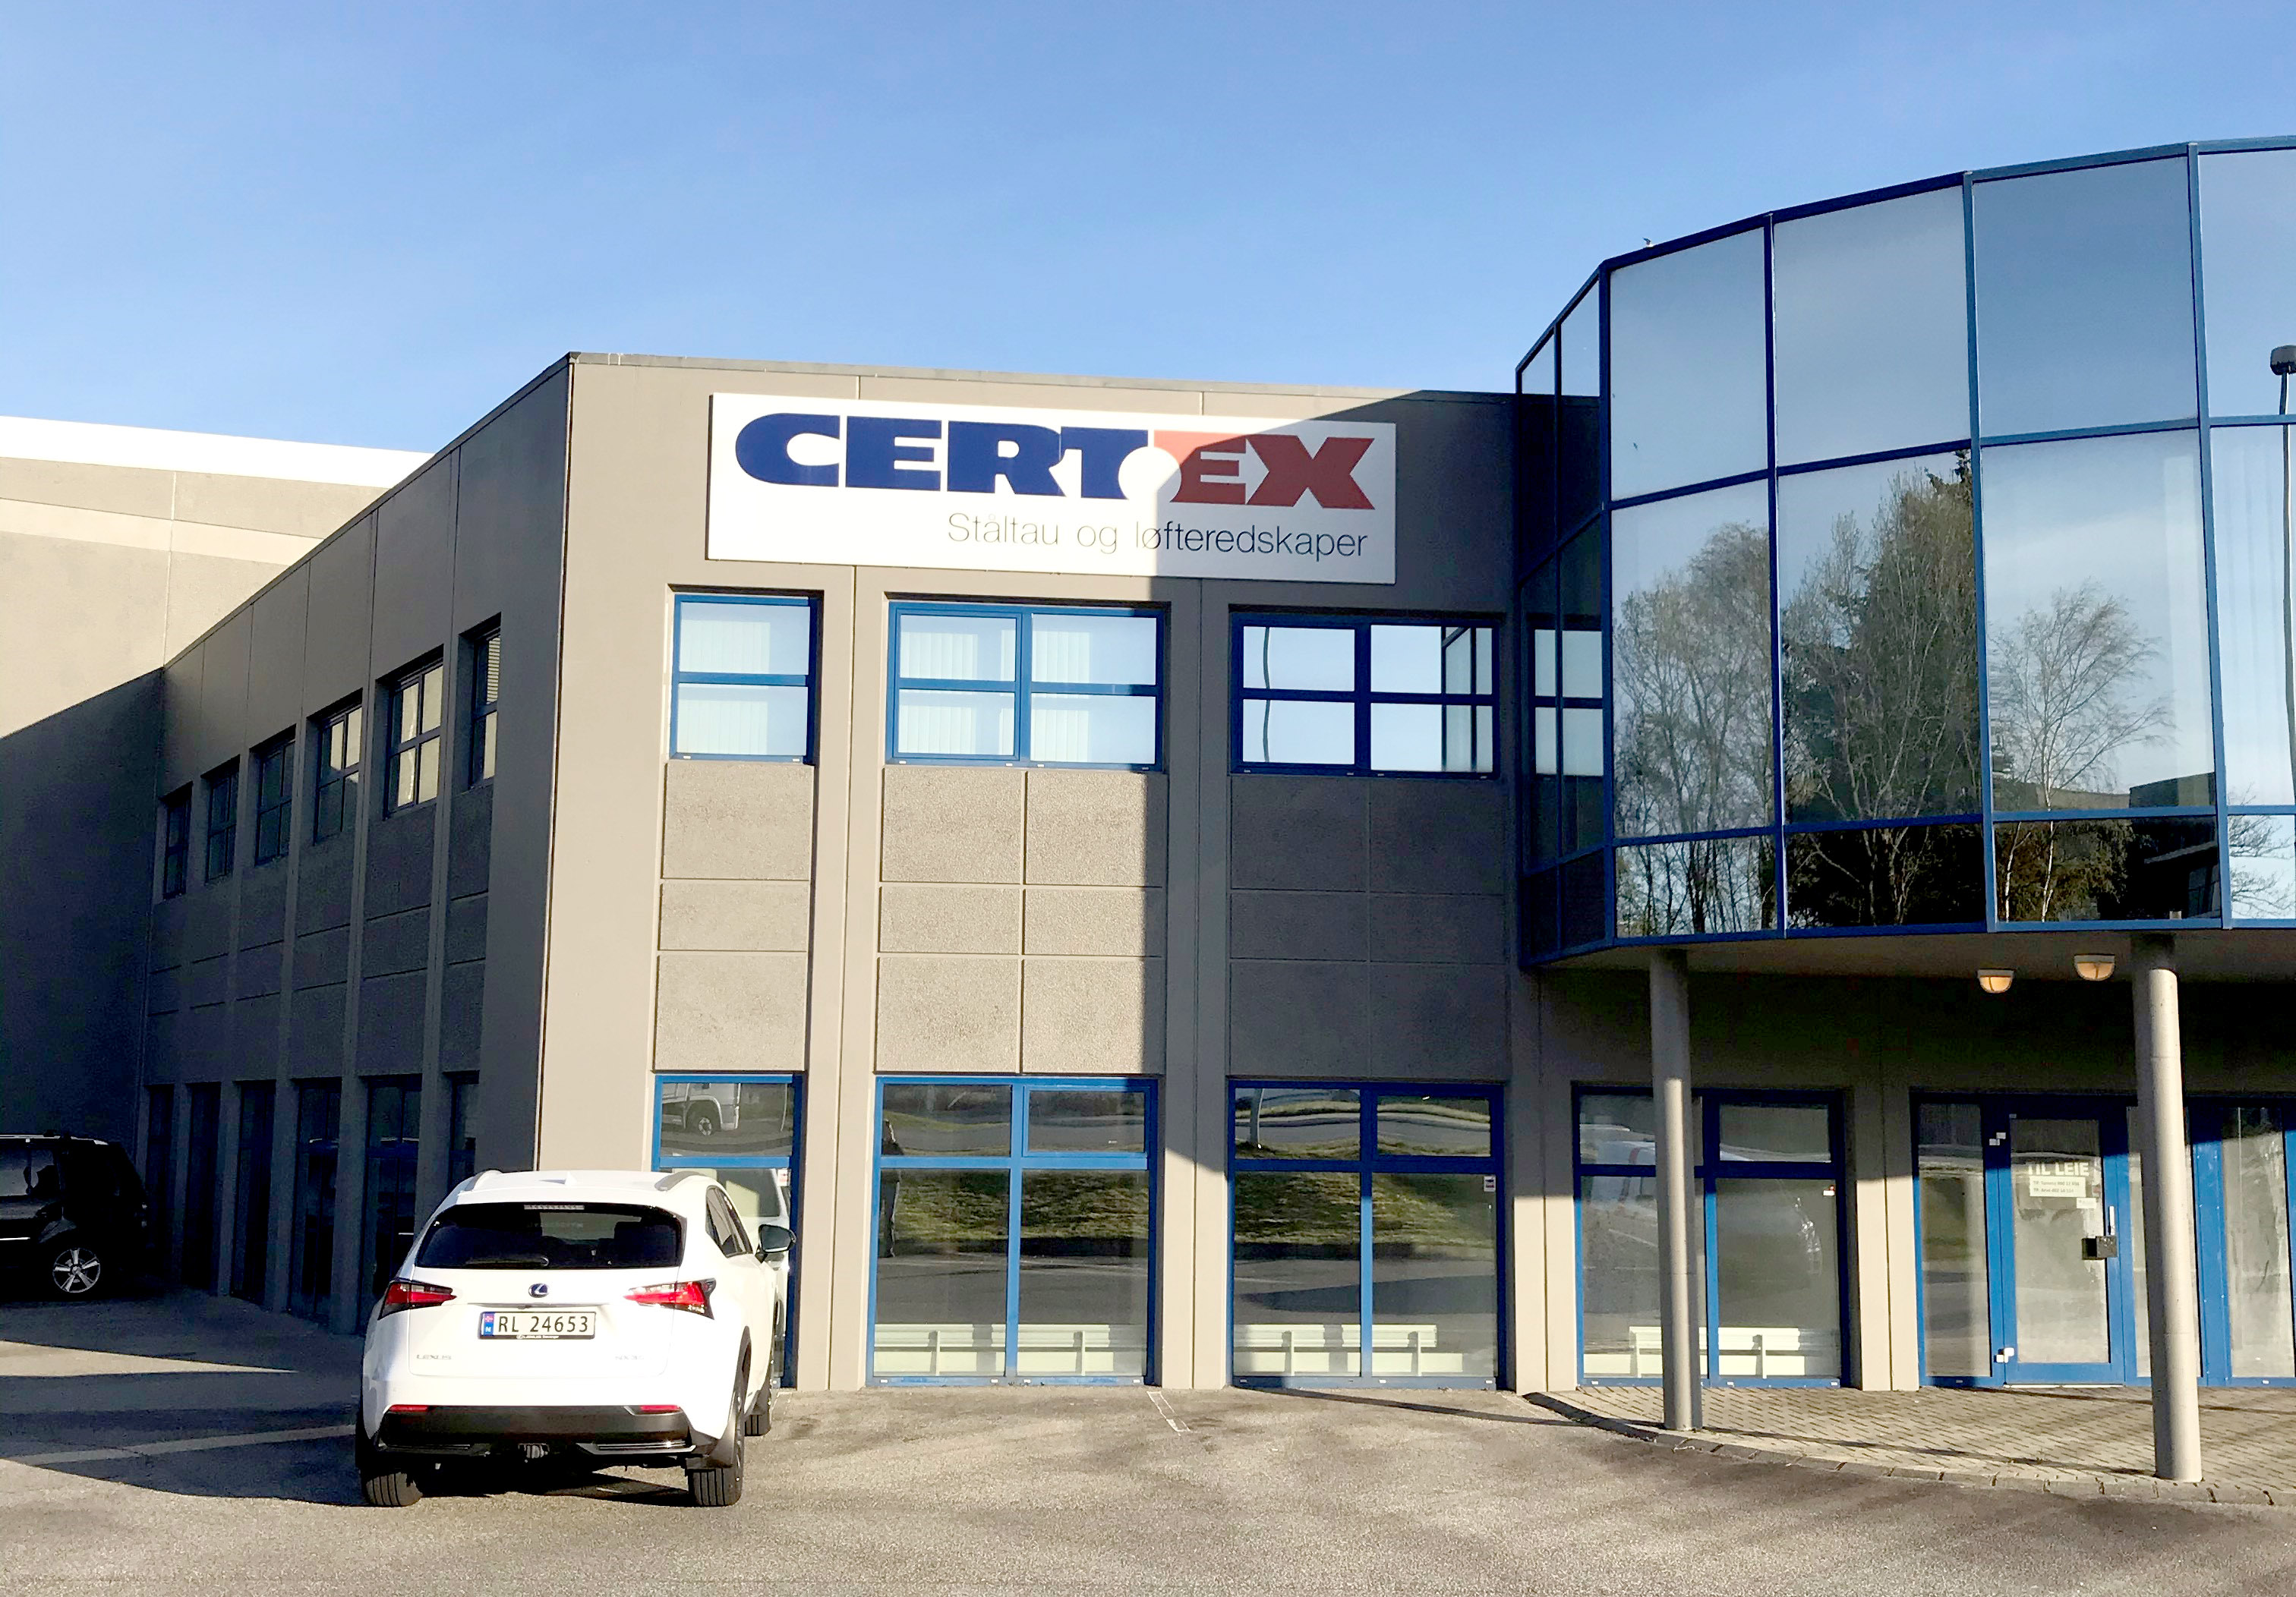 Certex Norge AS Stavanger department